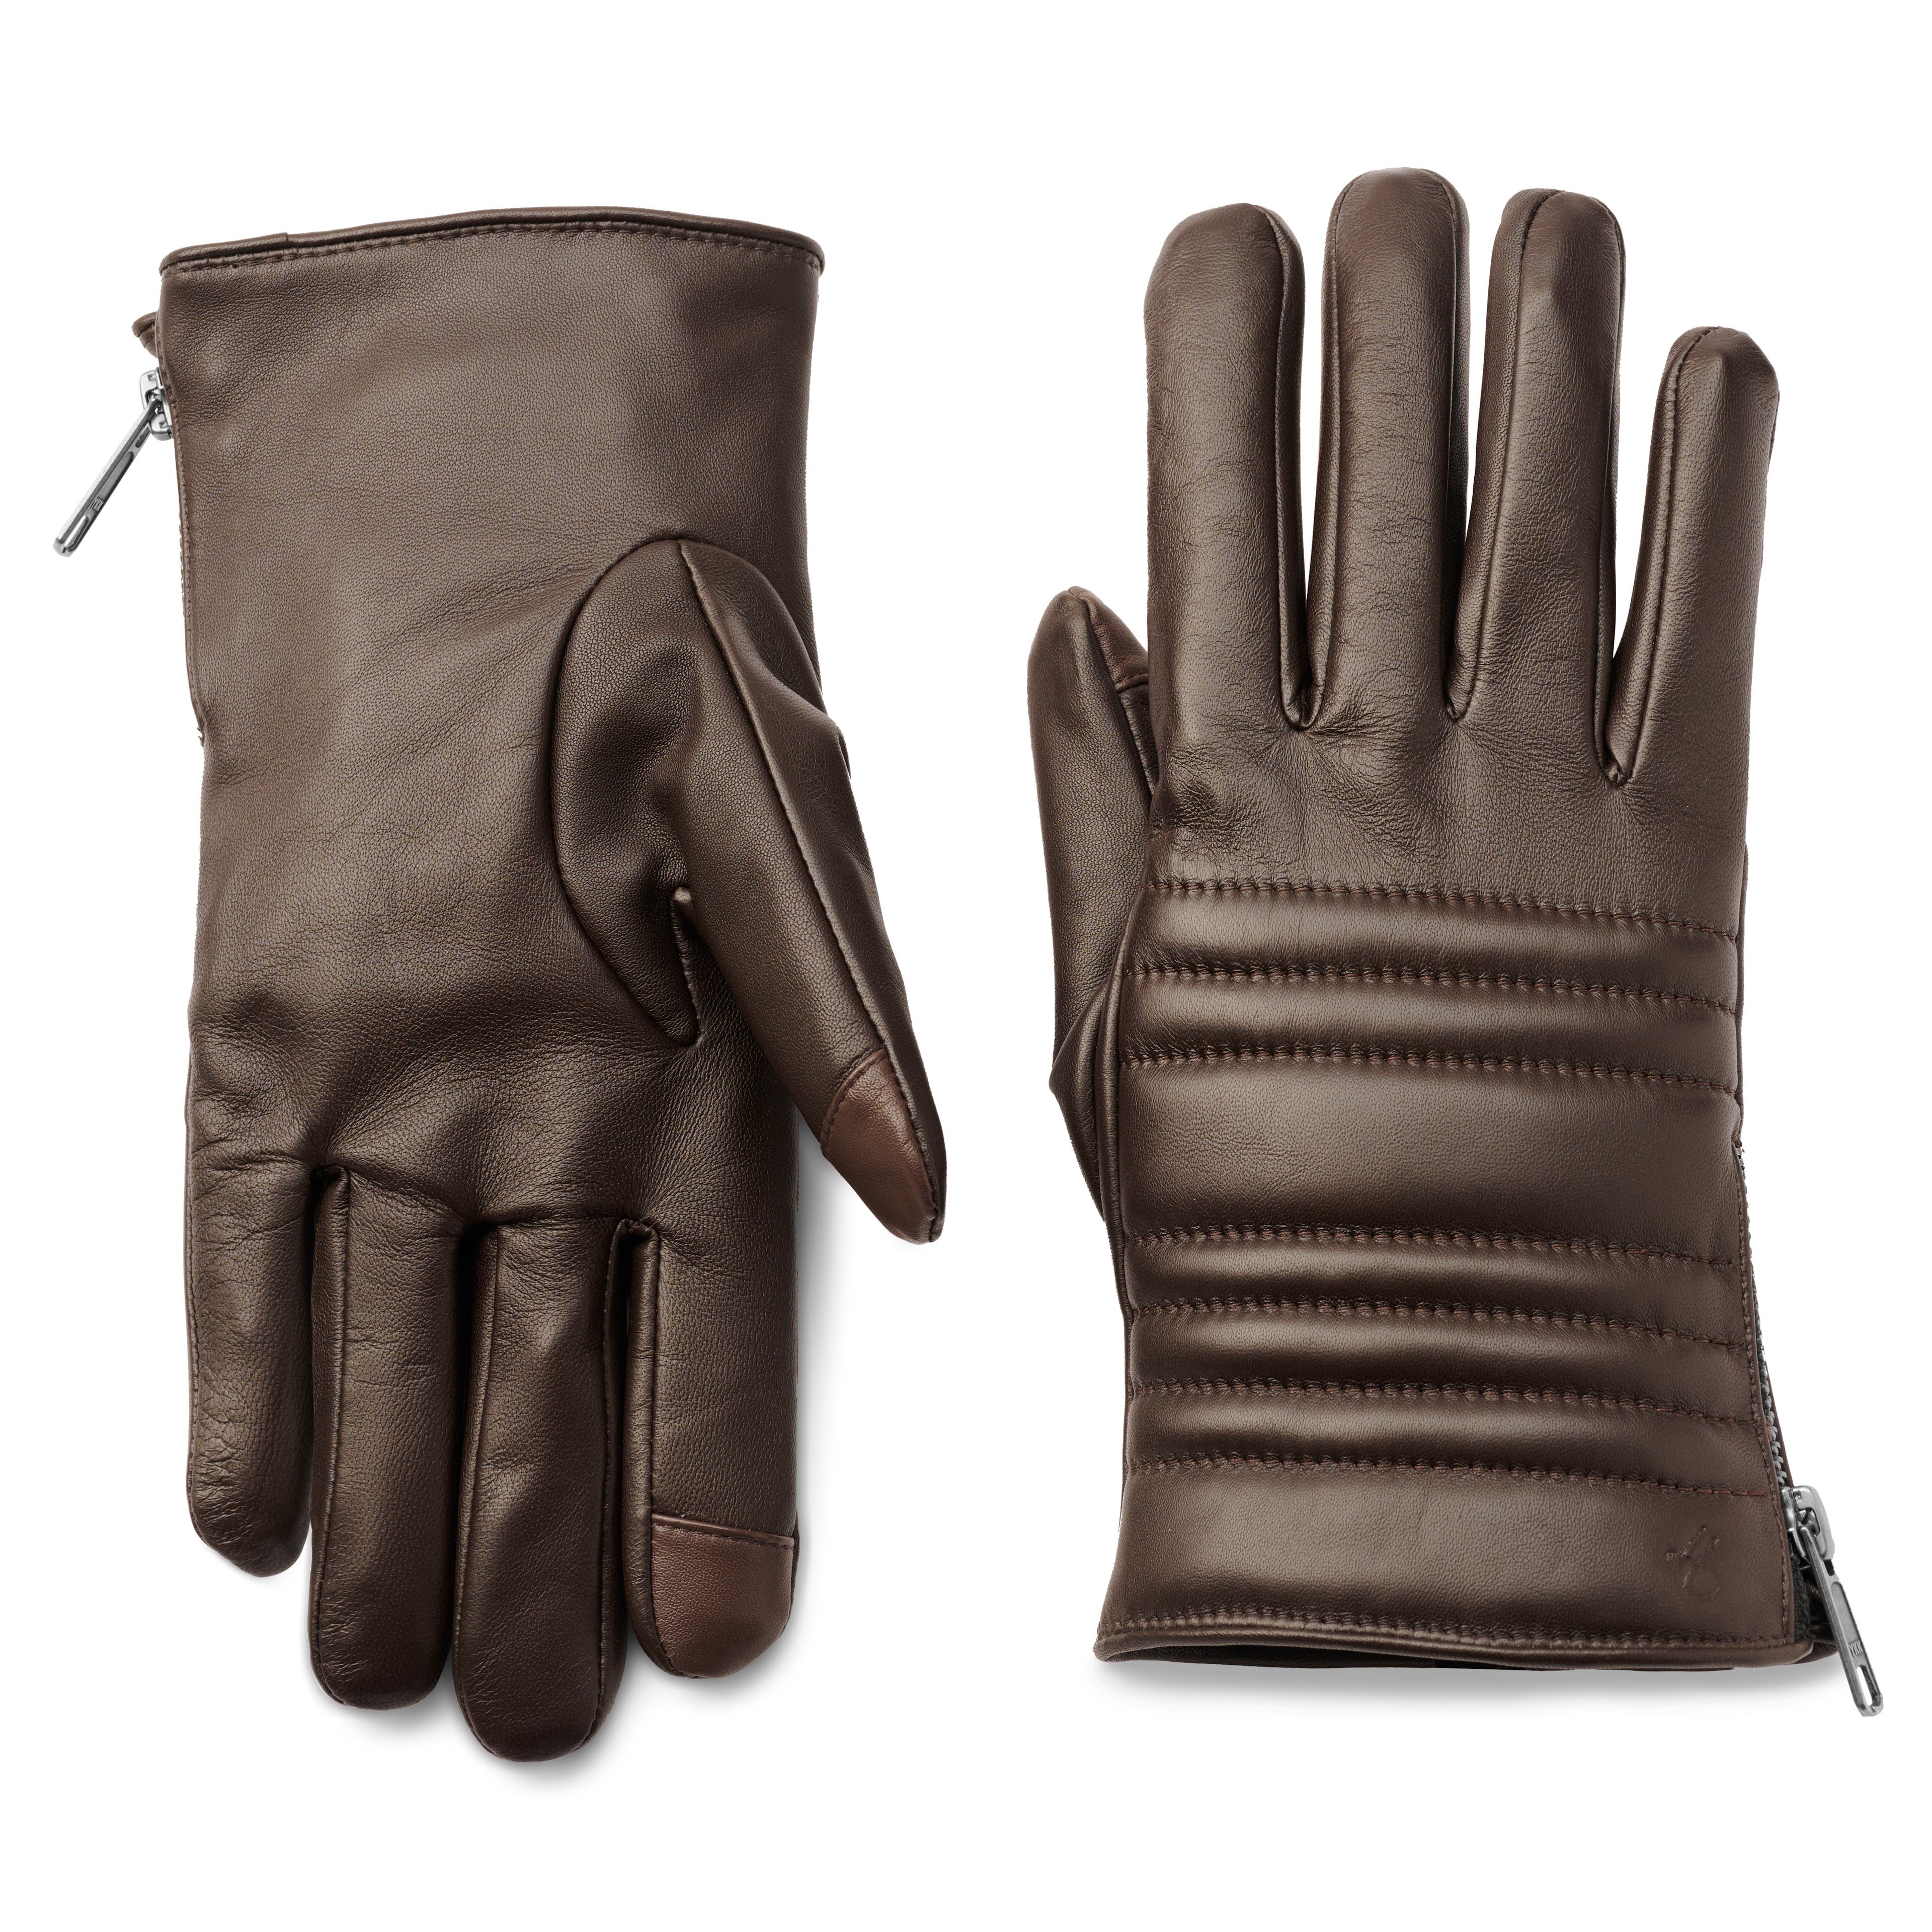 Hnedé rebrované kožené rukavice kompatibilné s dotykovou obrazovkou